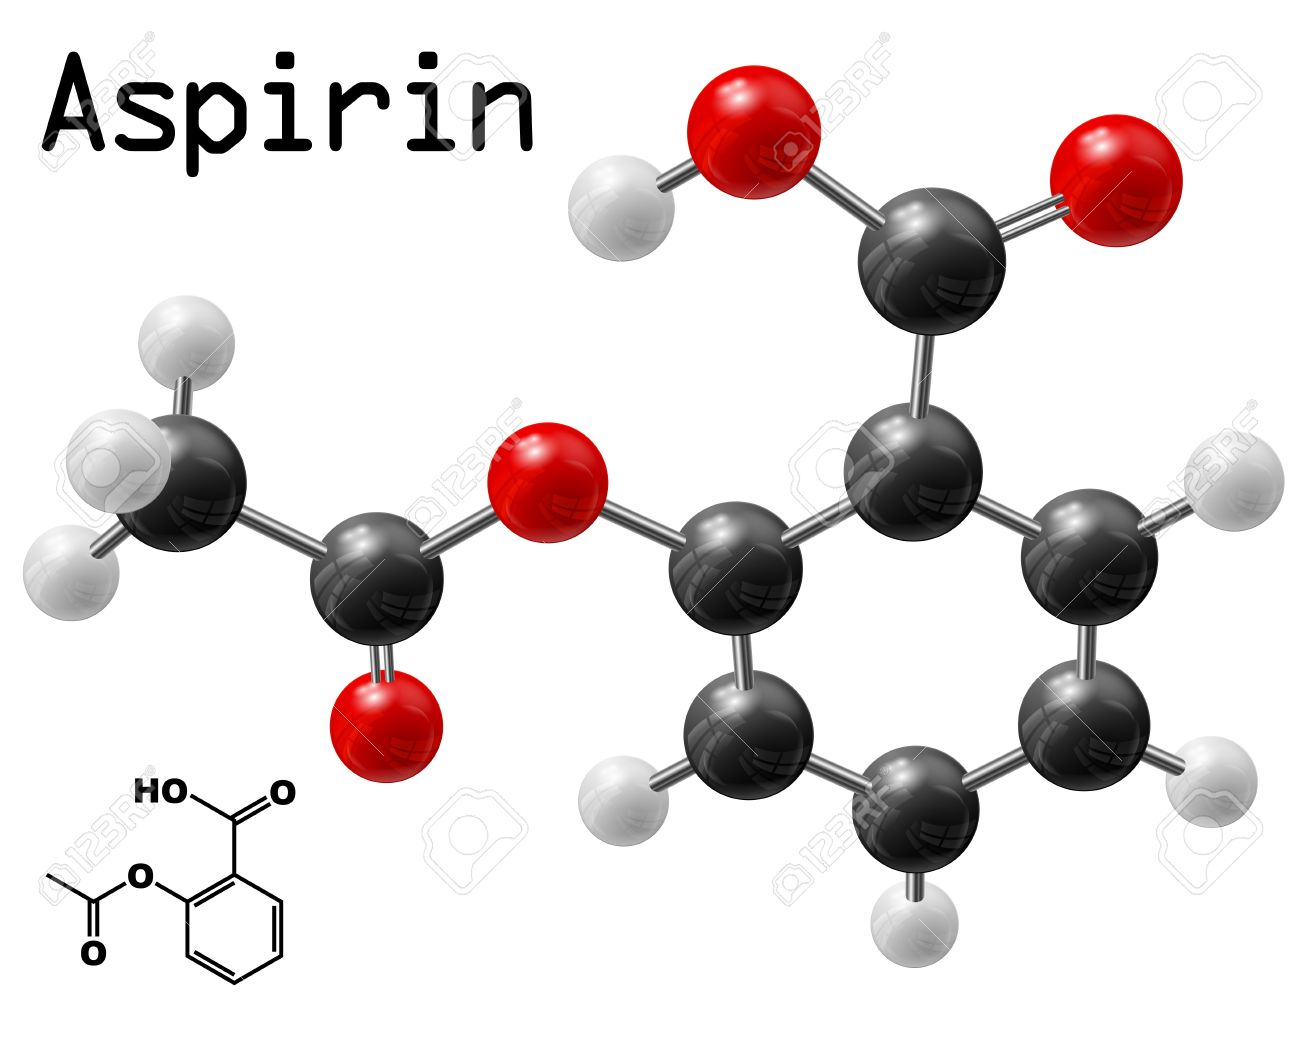 http://www.123rf.com/photo_18083157_structural-model-of-aspirin-molecule.html